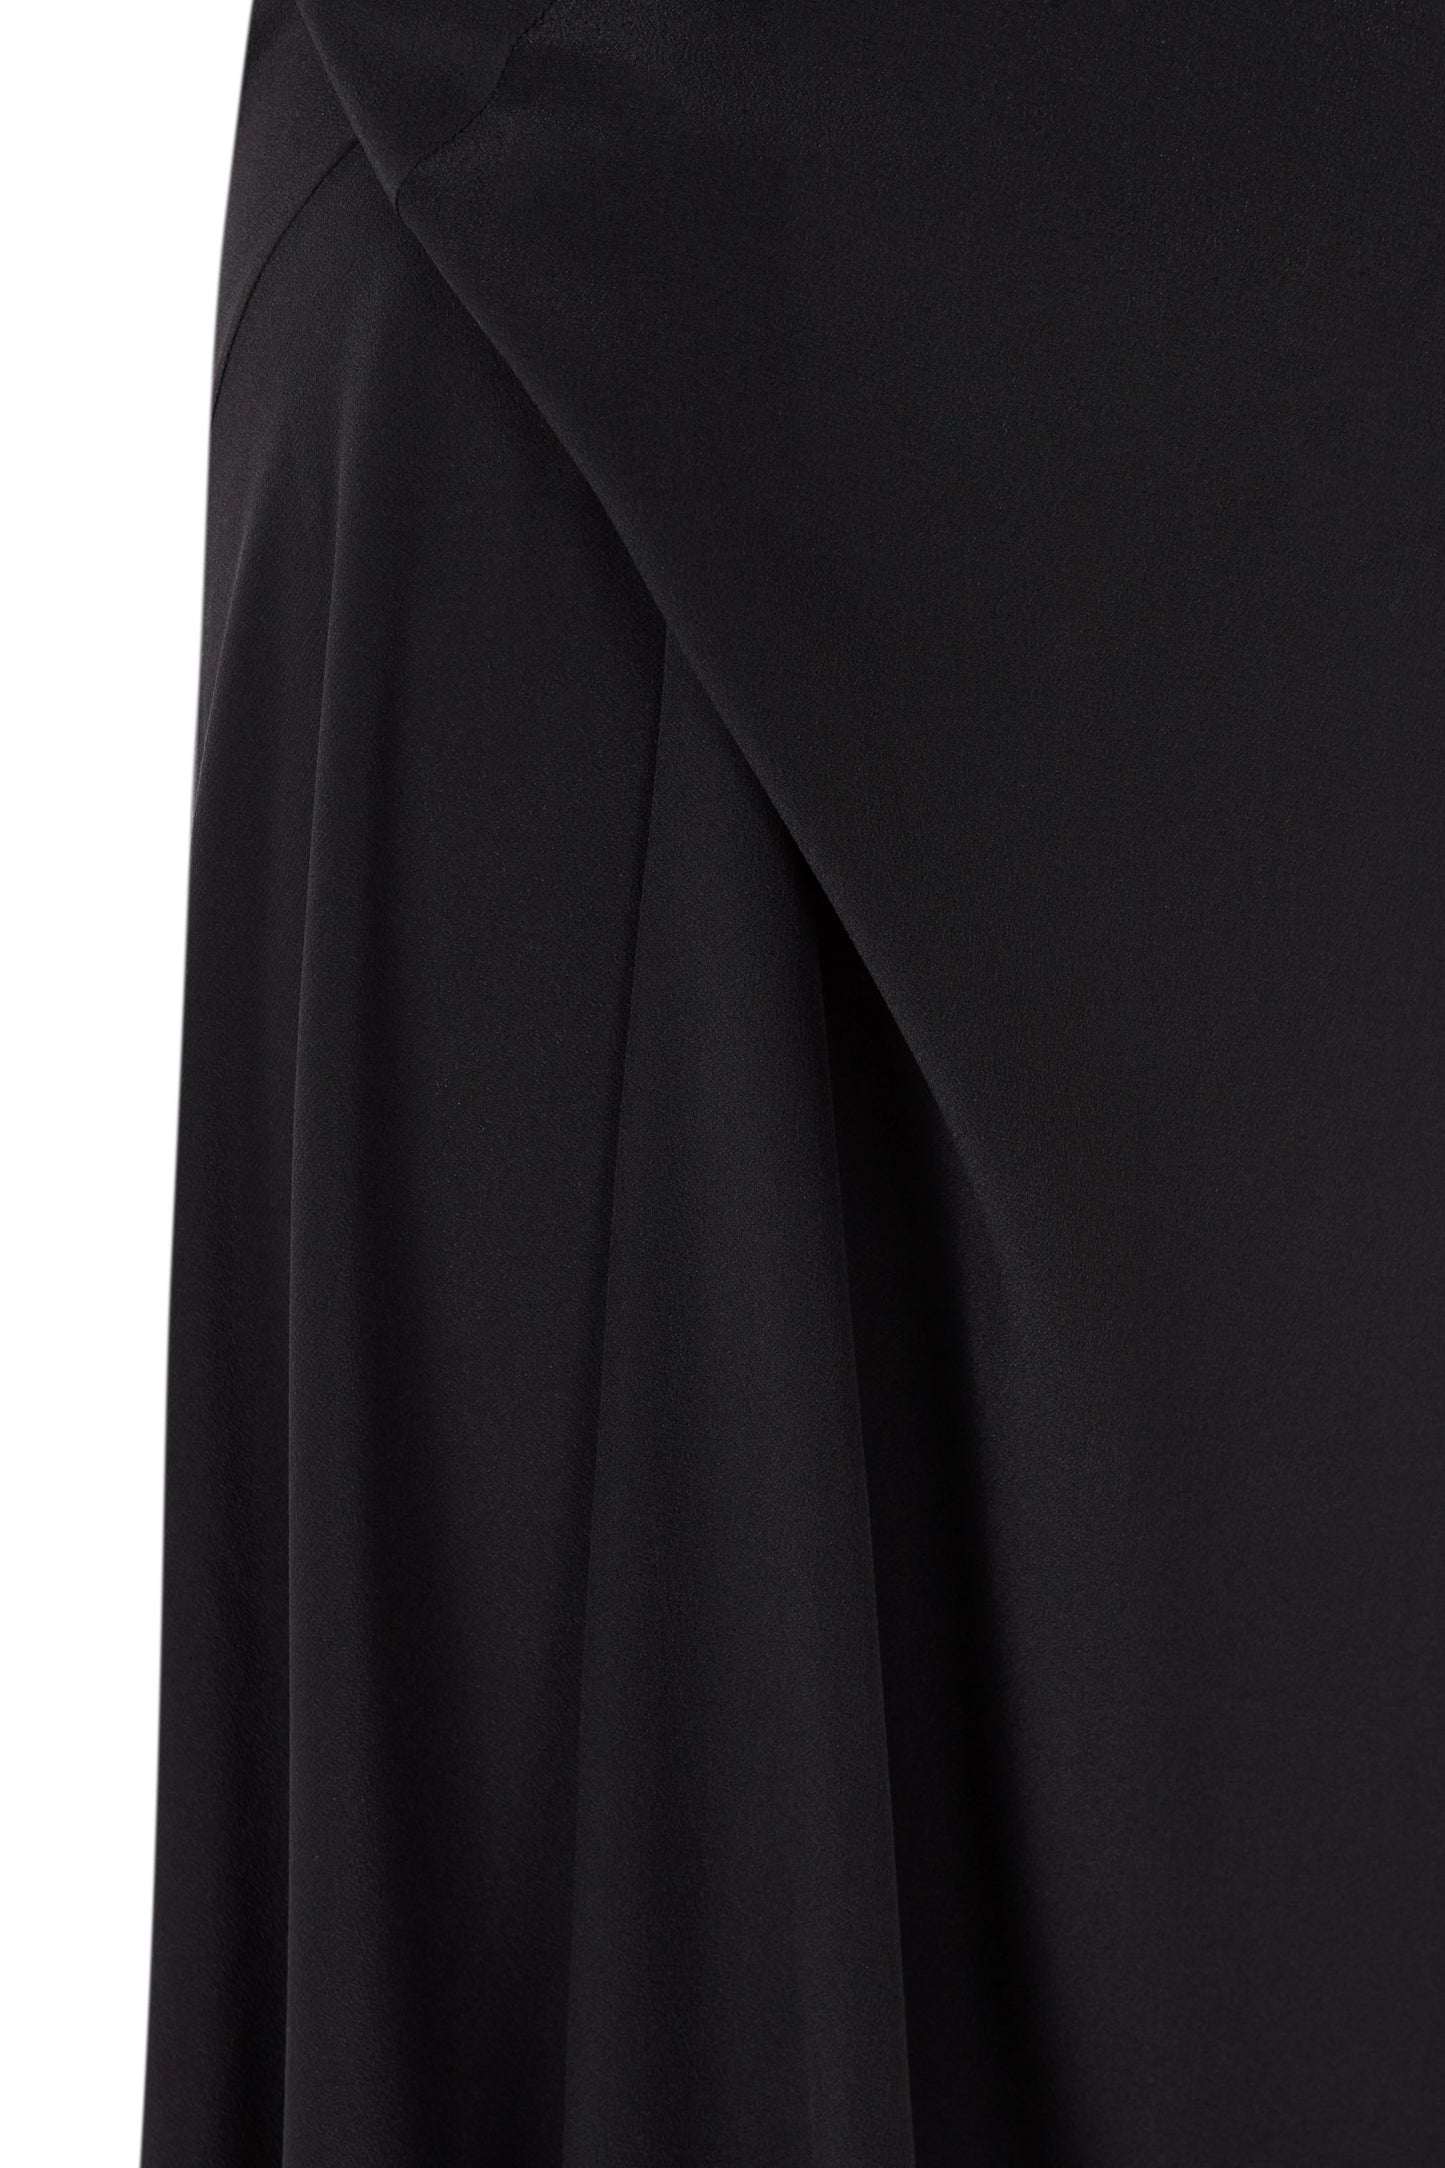 Martina, long black silk dress